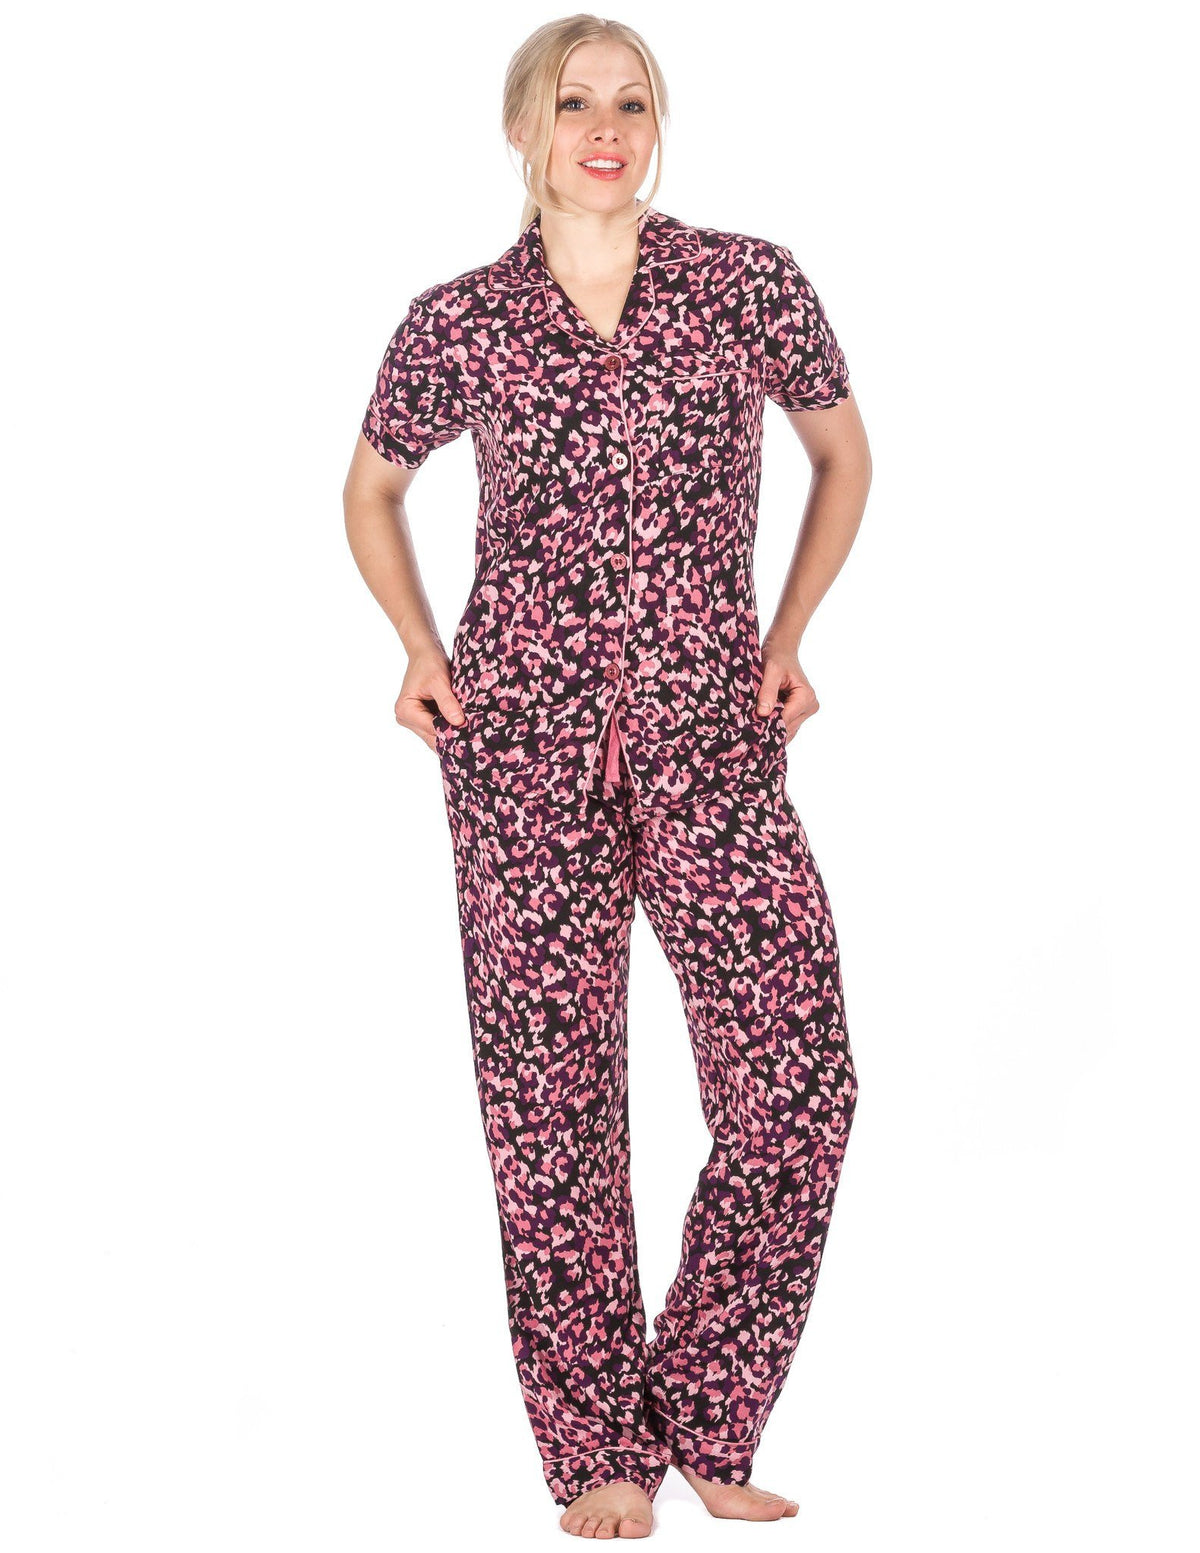 Women's Cool Breeze Woven Short Sleeve Pajama Set - Leopard - Purple/Pink